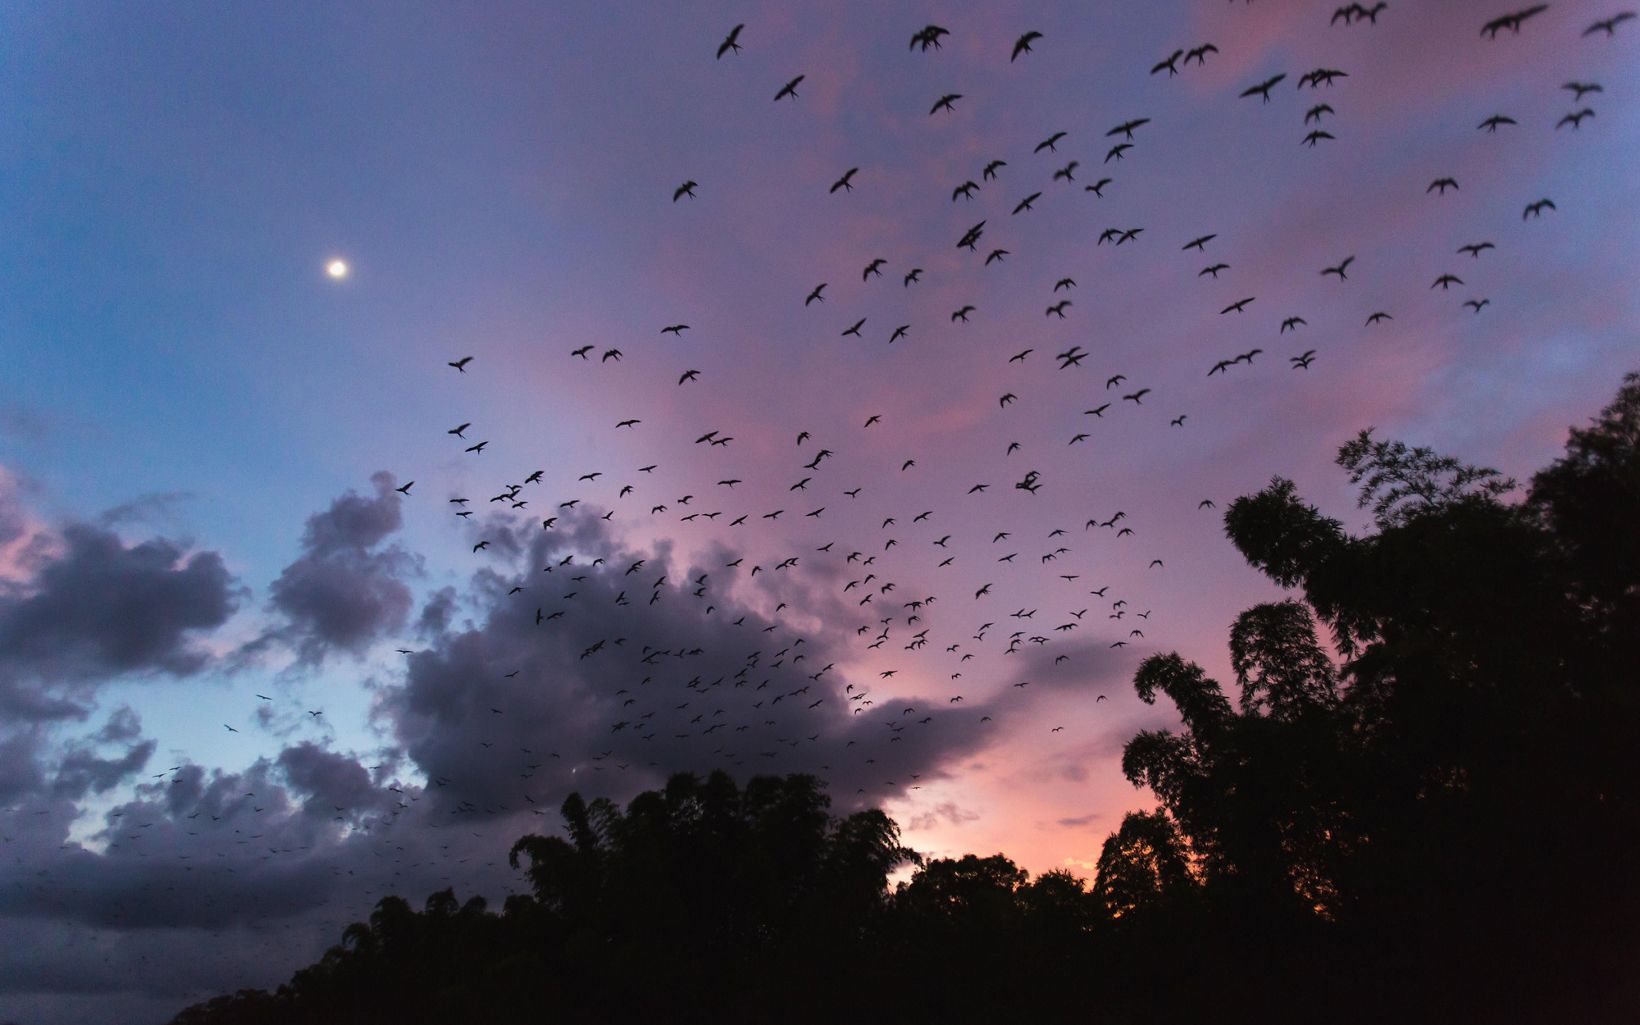  Swallow-tailed kites  take to the sky at dusk. © Mac Stone